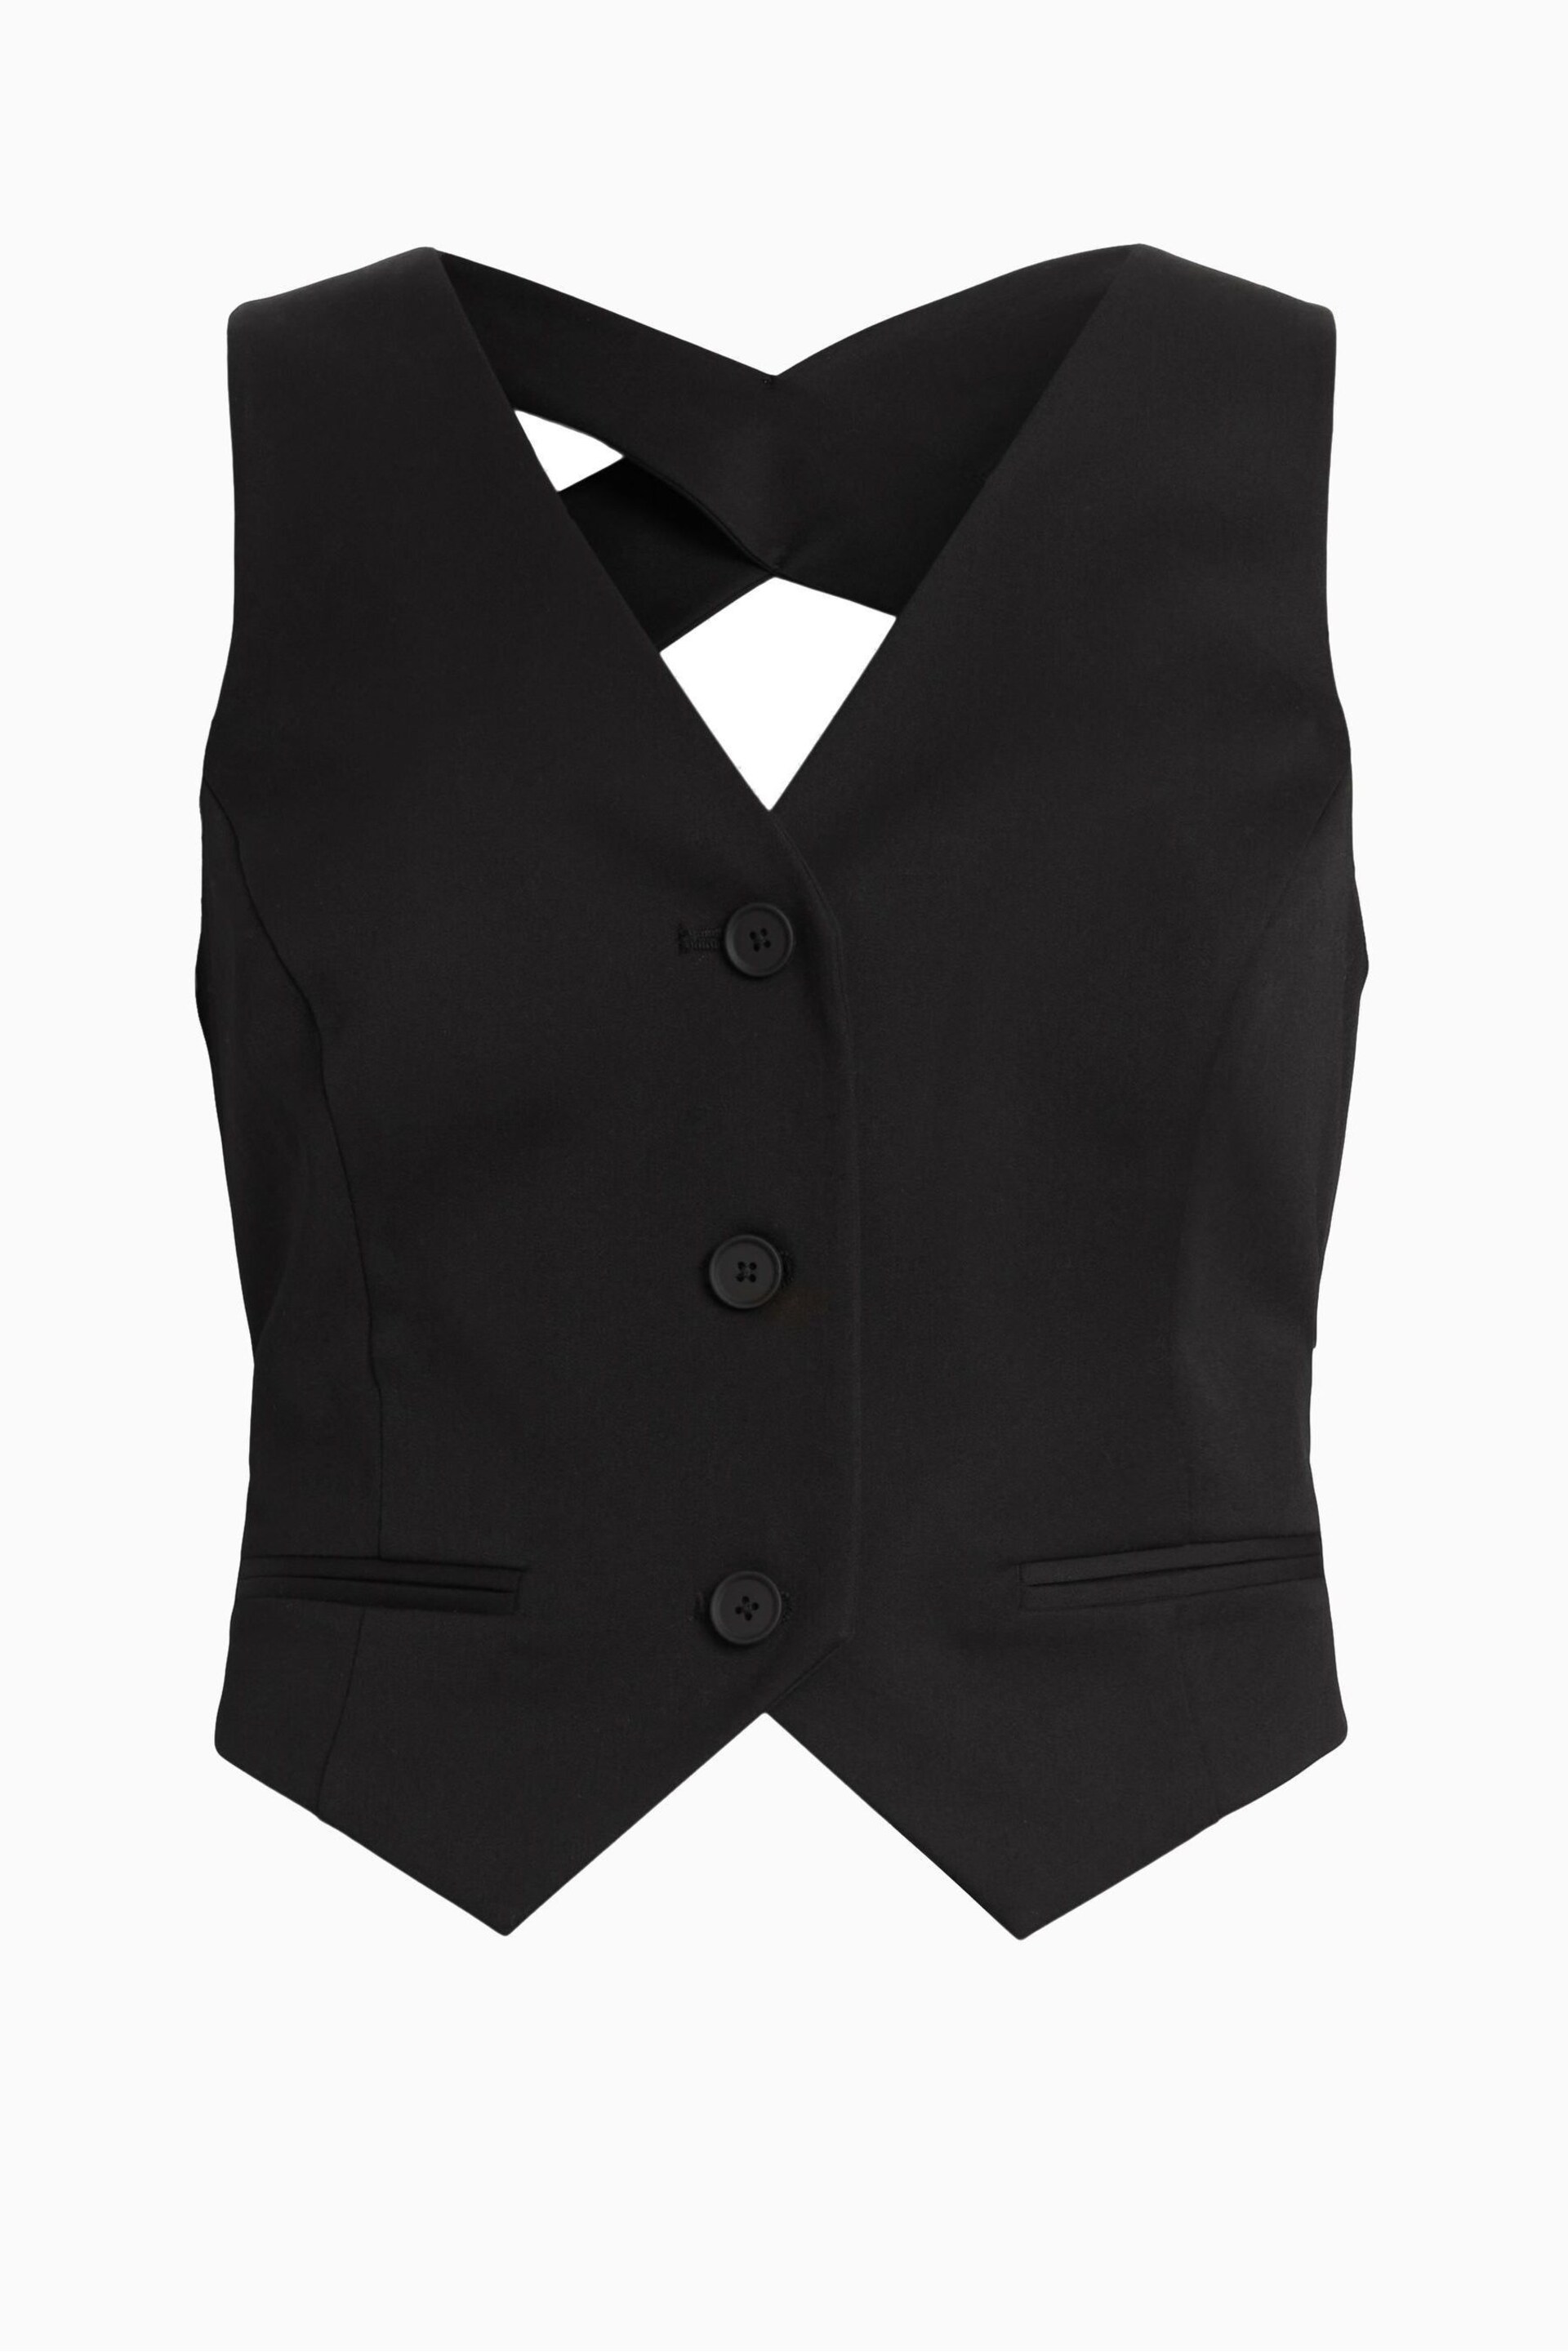 AllSaints Black Nellie Waistcoat - Image 6 of 6